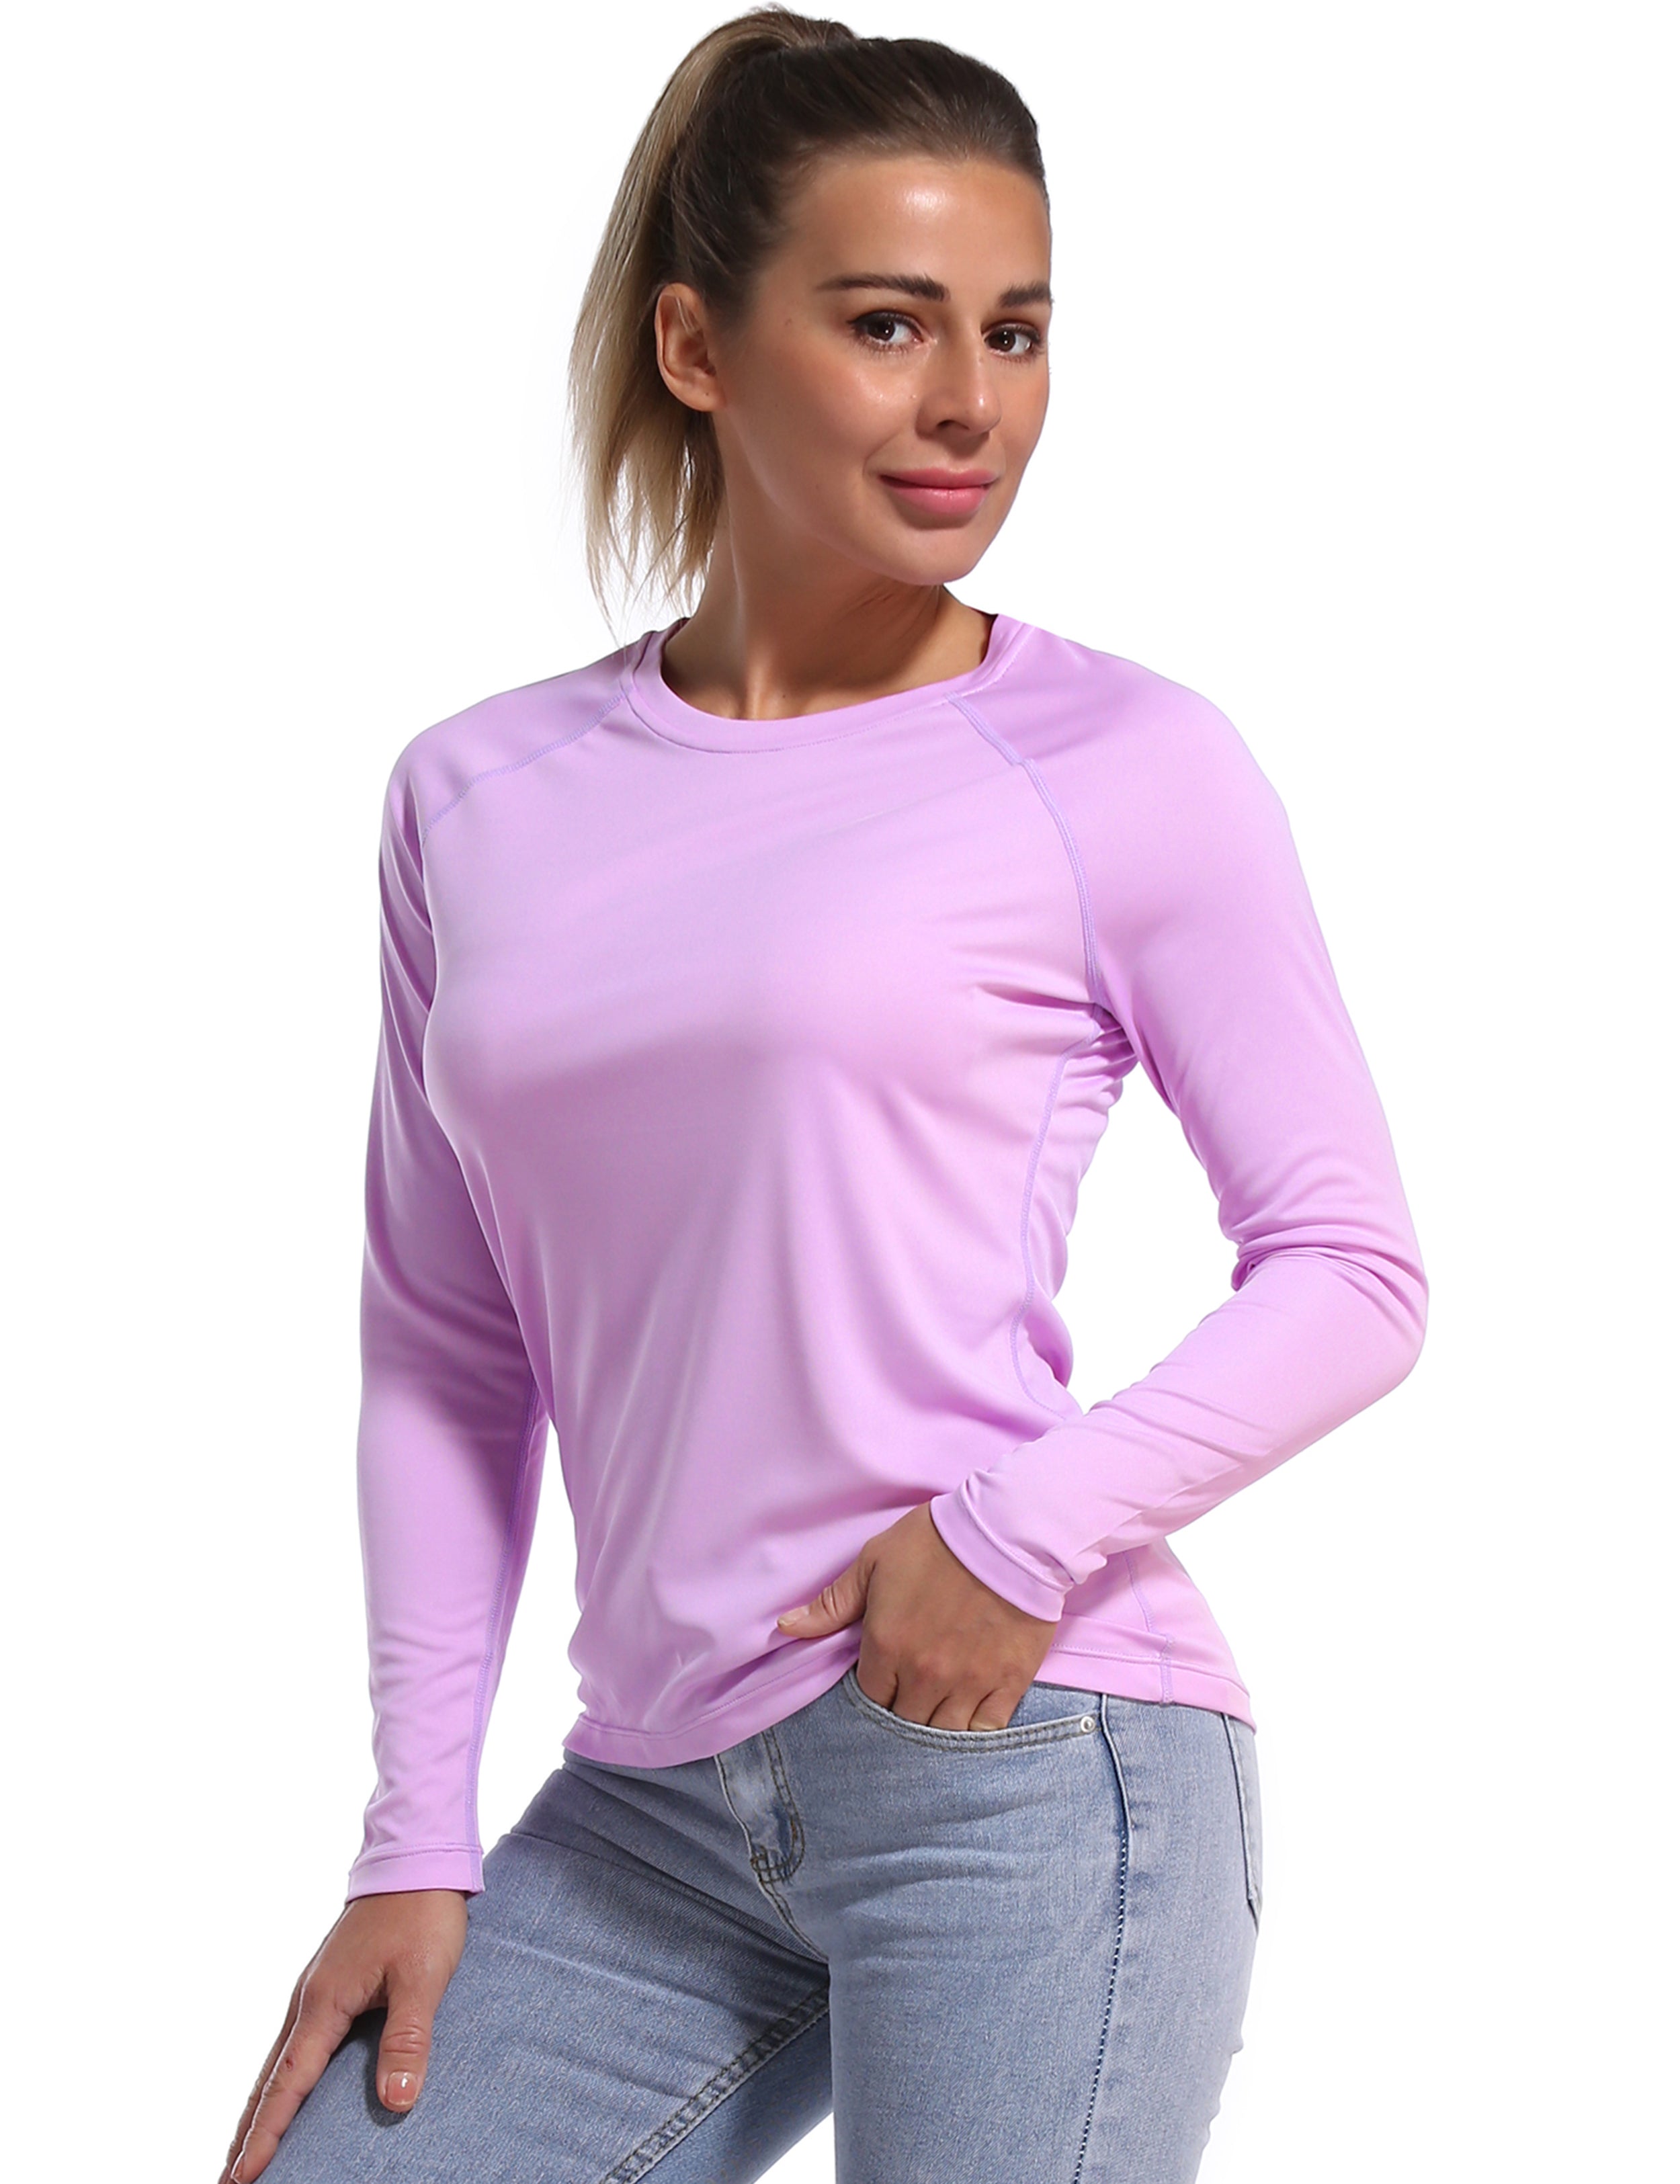 Long Sleeve Athletic Shirts purple 100% polyester Lightweight Slim Fit UPF 50+ blocks sun's harmful rays Treated to wick moisture, dries ultra-fast